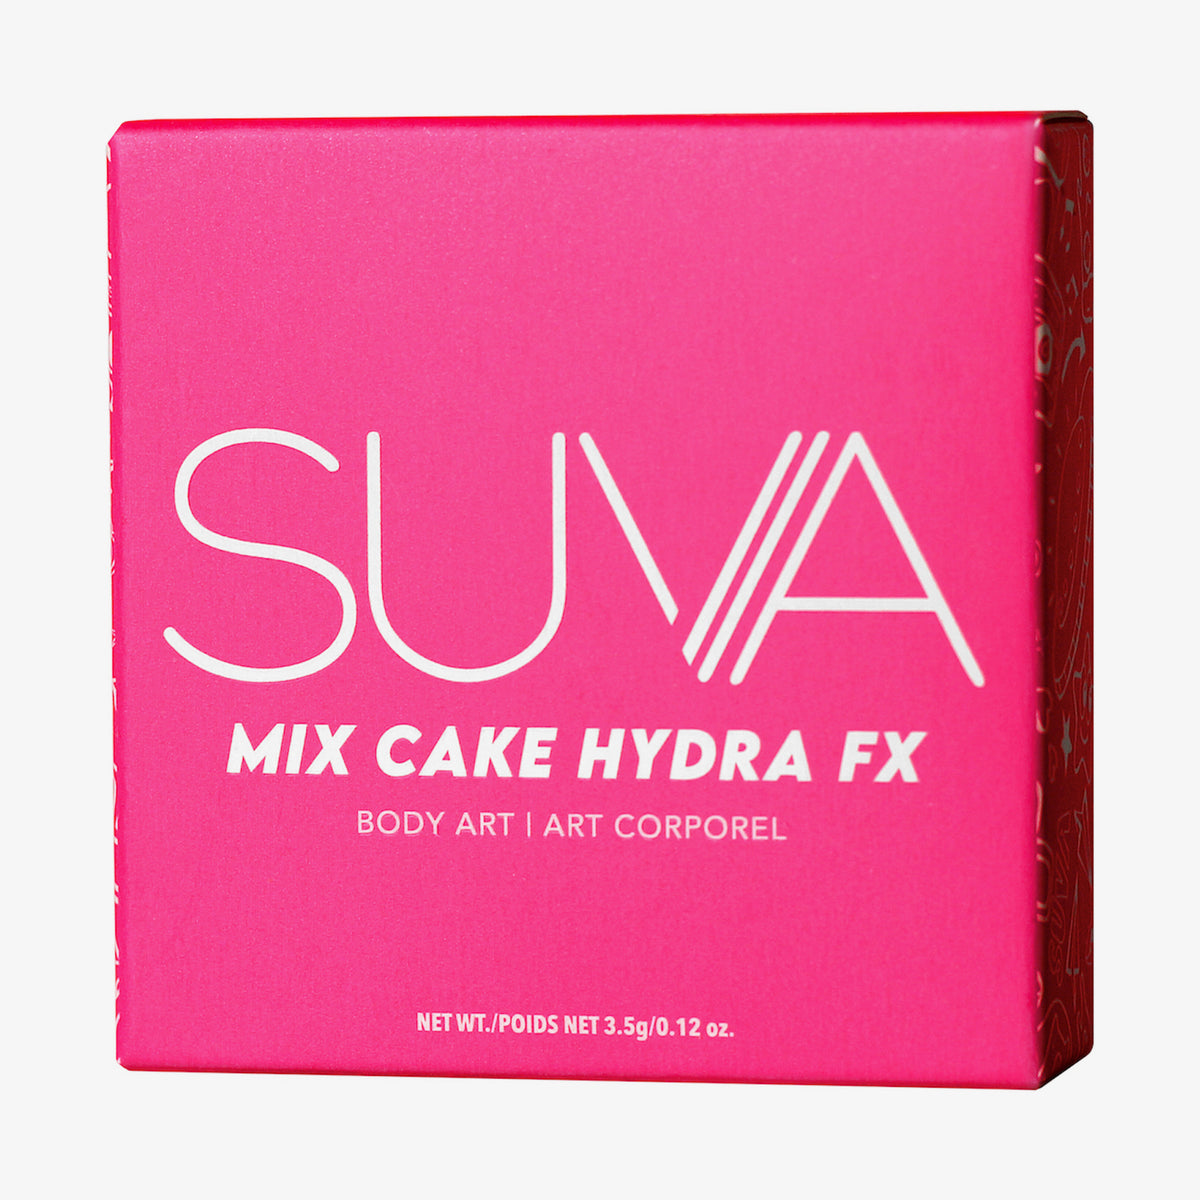 Mix Cake Hydra FX